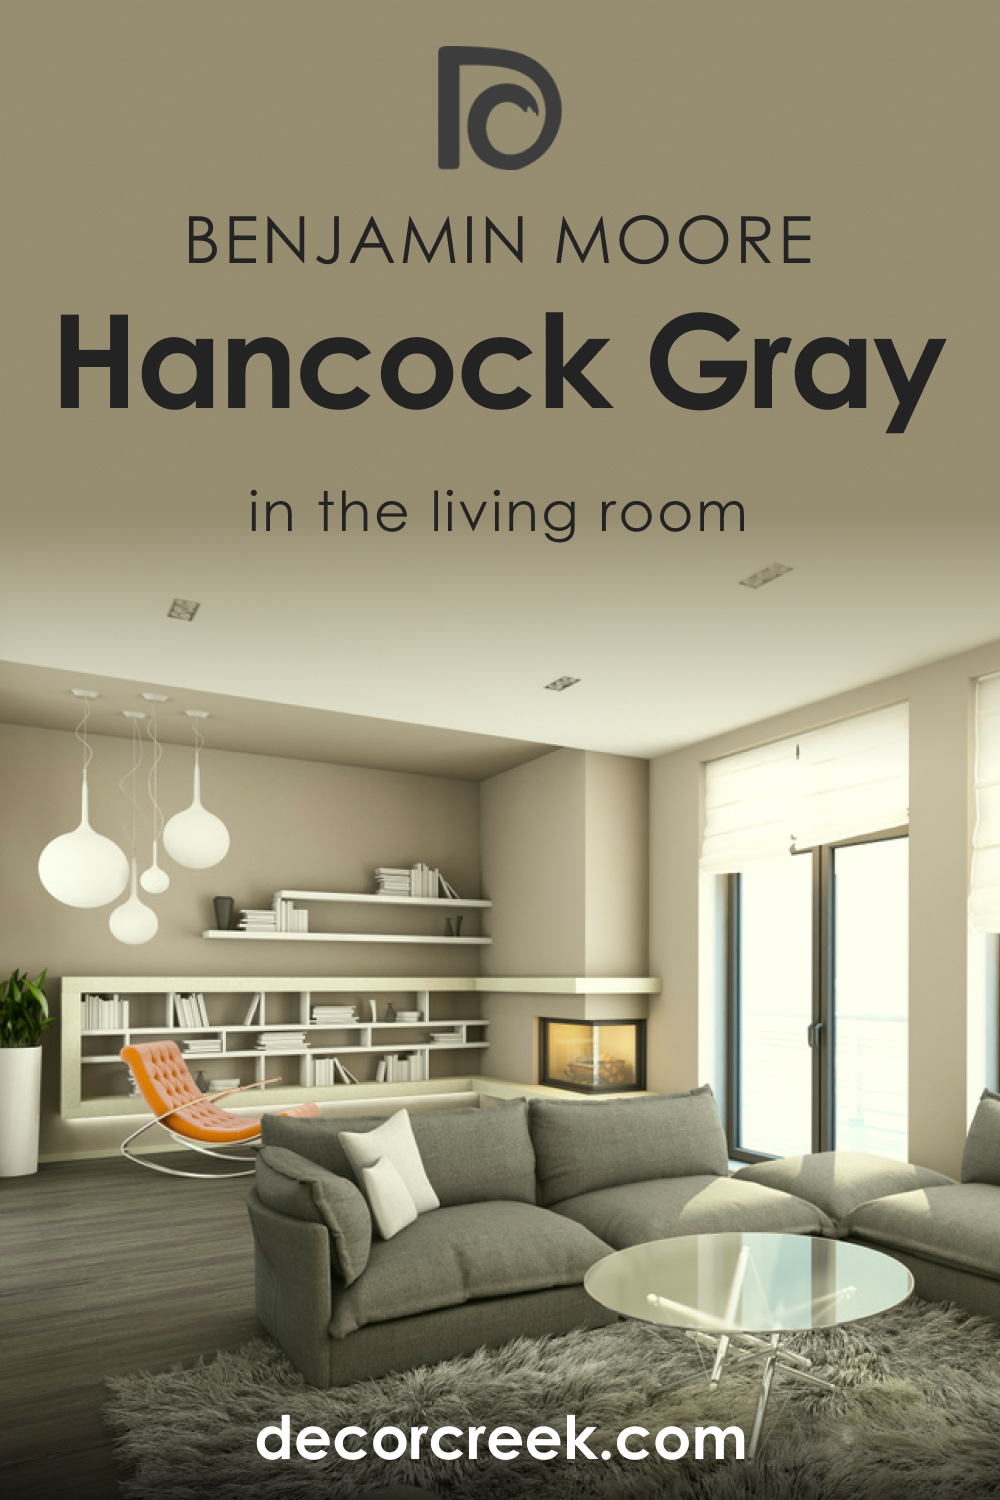 Hancock Gray HC-97 in the Living Room